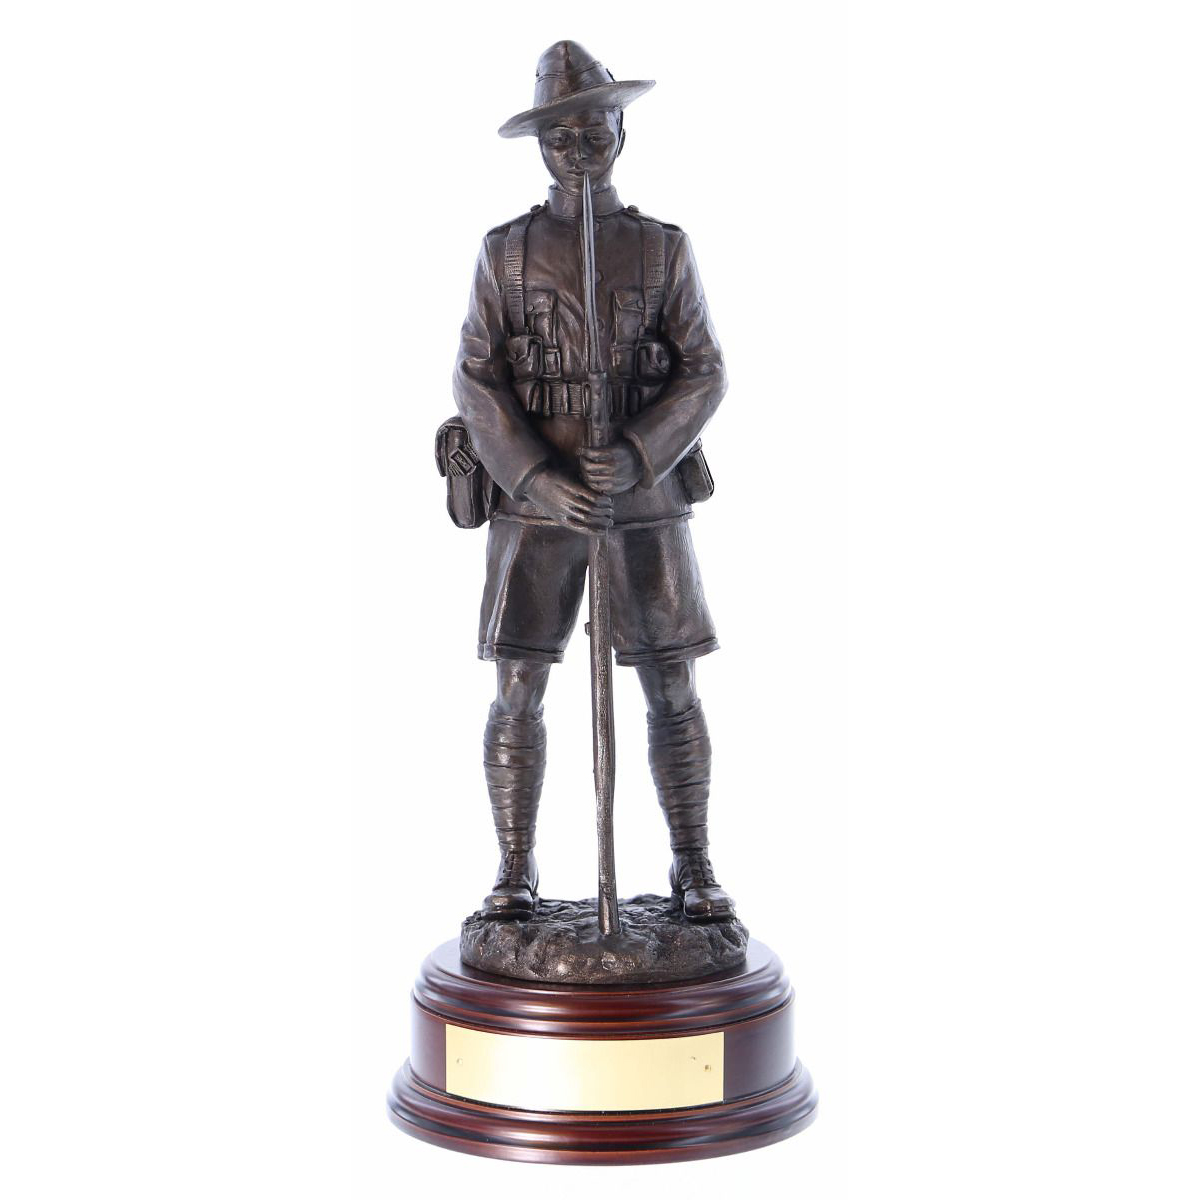 The Gurkha Soldier Statue